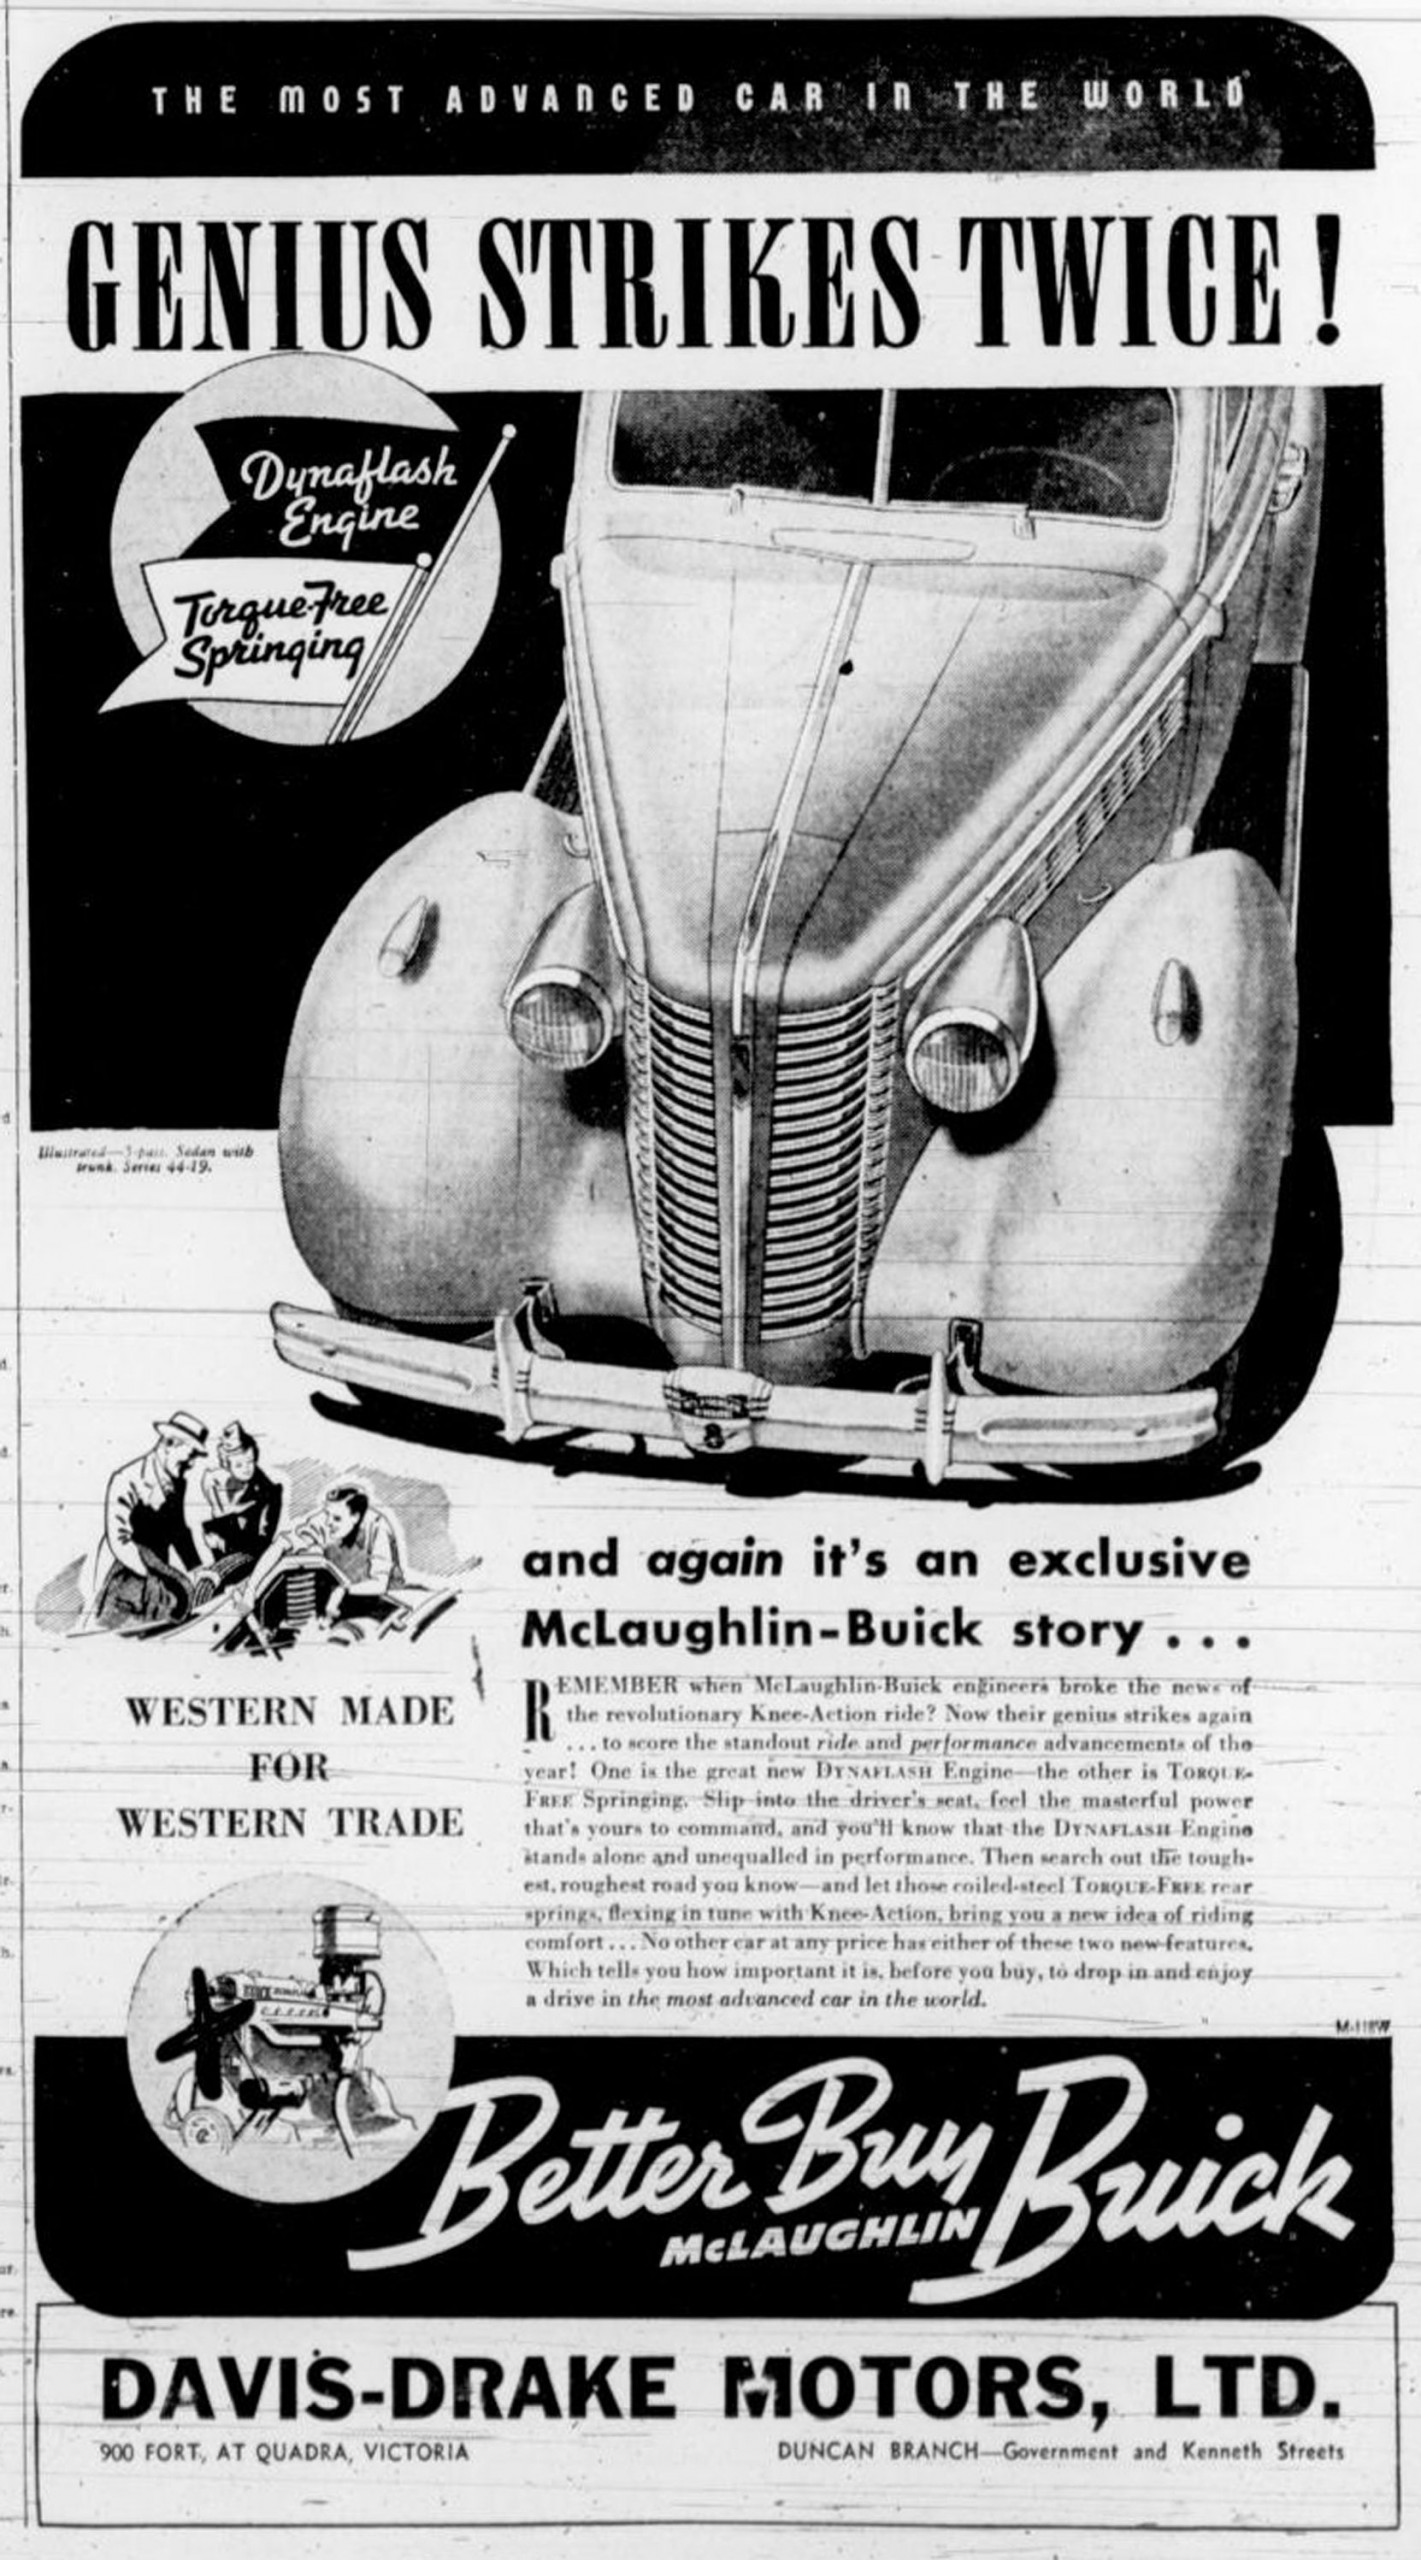 Davis-Drake Motors advertisement for McLaughlin-Buick, 1938. Davis Drake Motors was located at 900 Fort Street at Quadra Street. (Victoria Online Sightseeing collection) ,